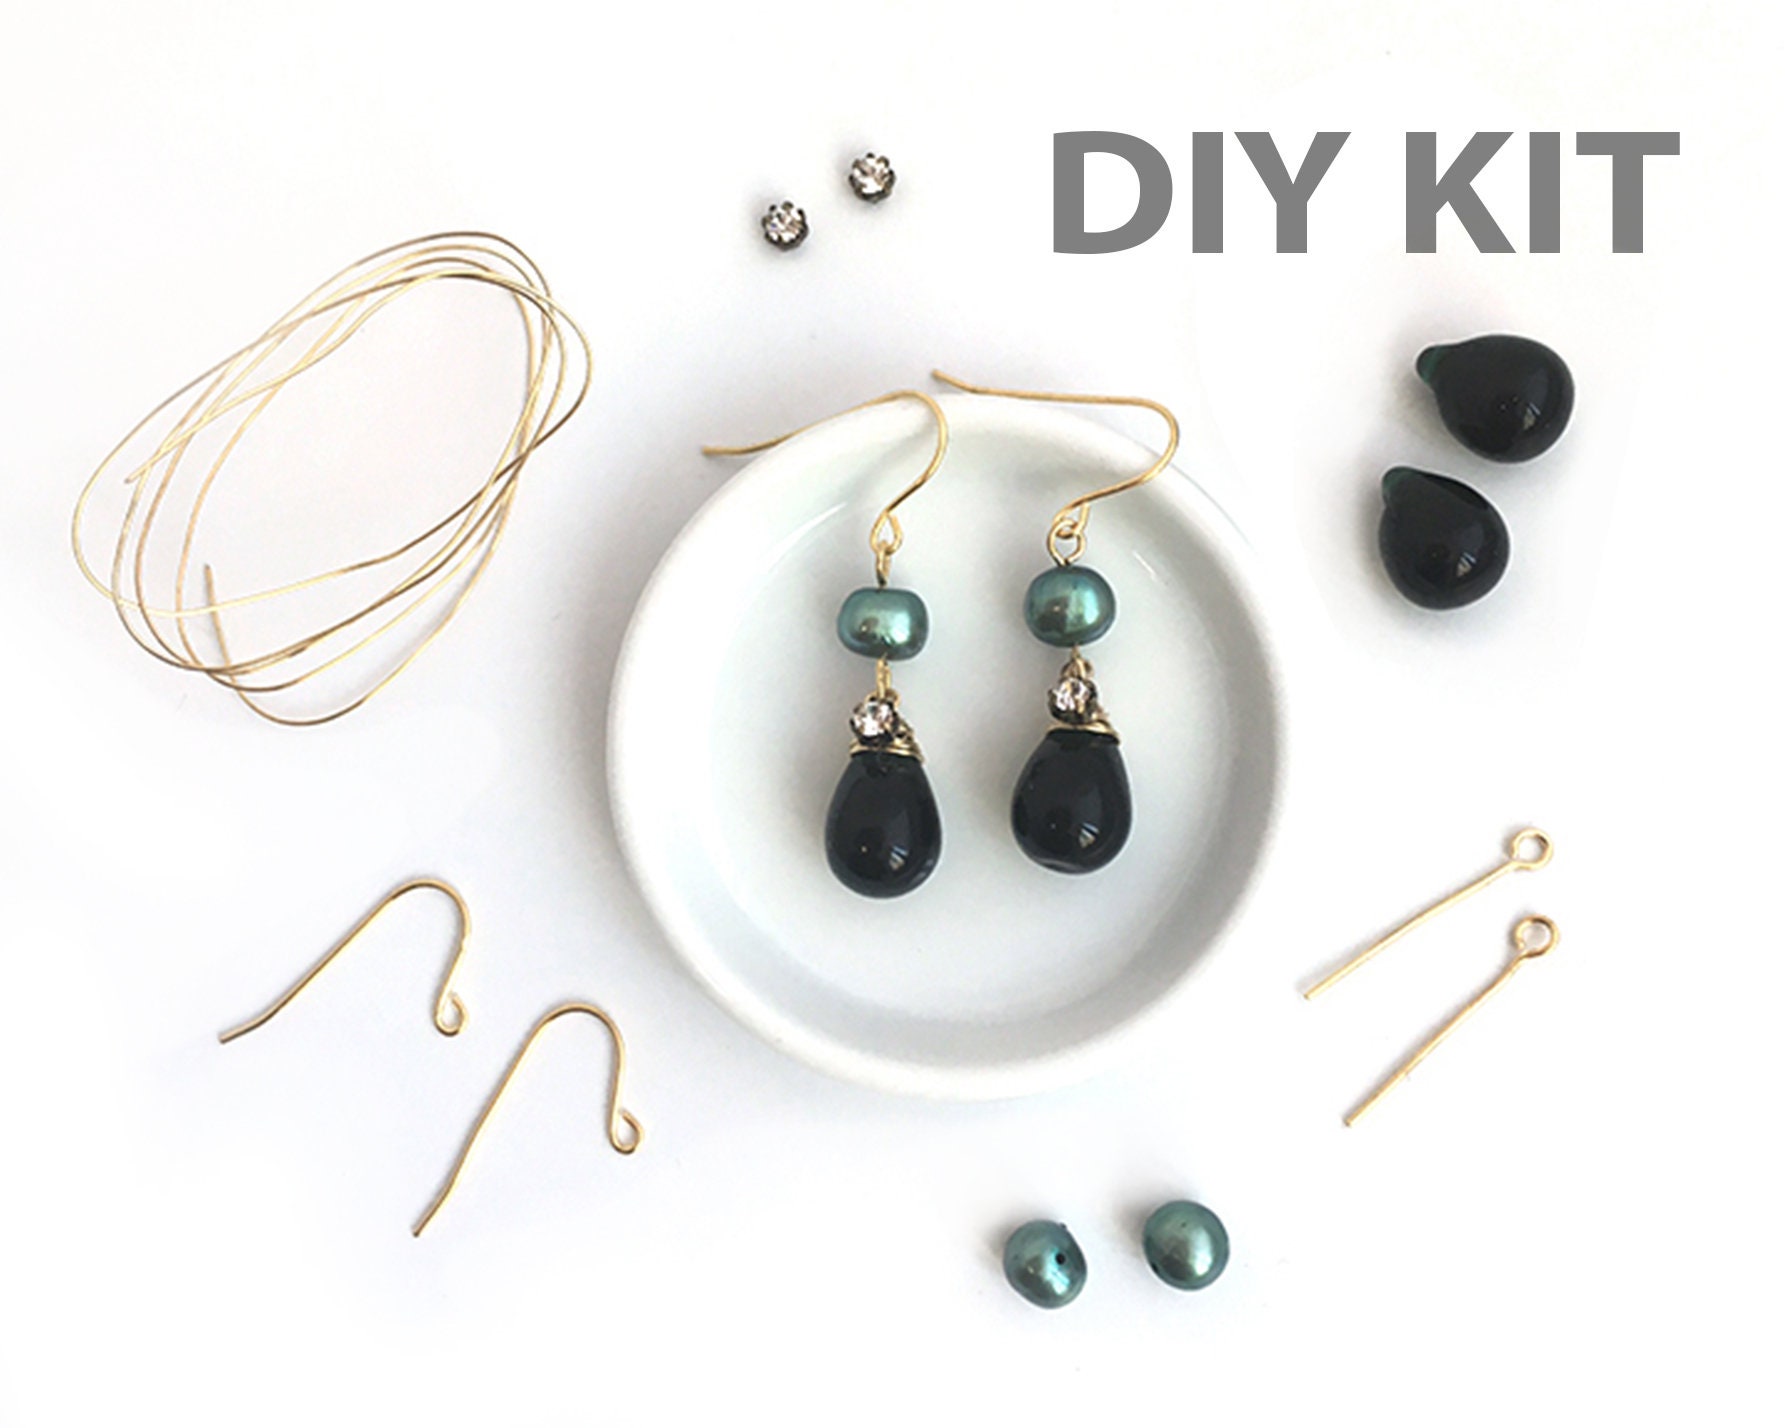 DIY Black White Patchwork Bead Crochet Necklace Kit Jewelry Making Kit Adult  Craft Supply Kit Bead Crochet Pattern Diy Craft Gift 